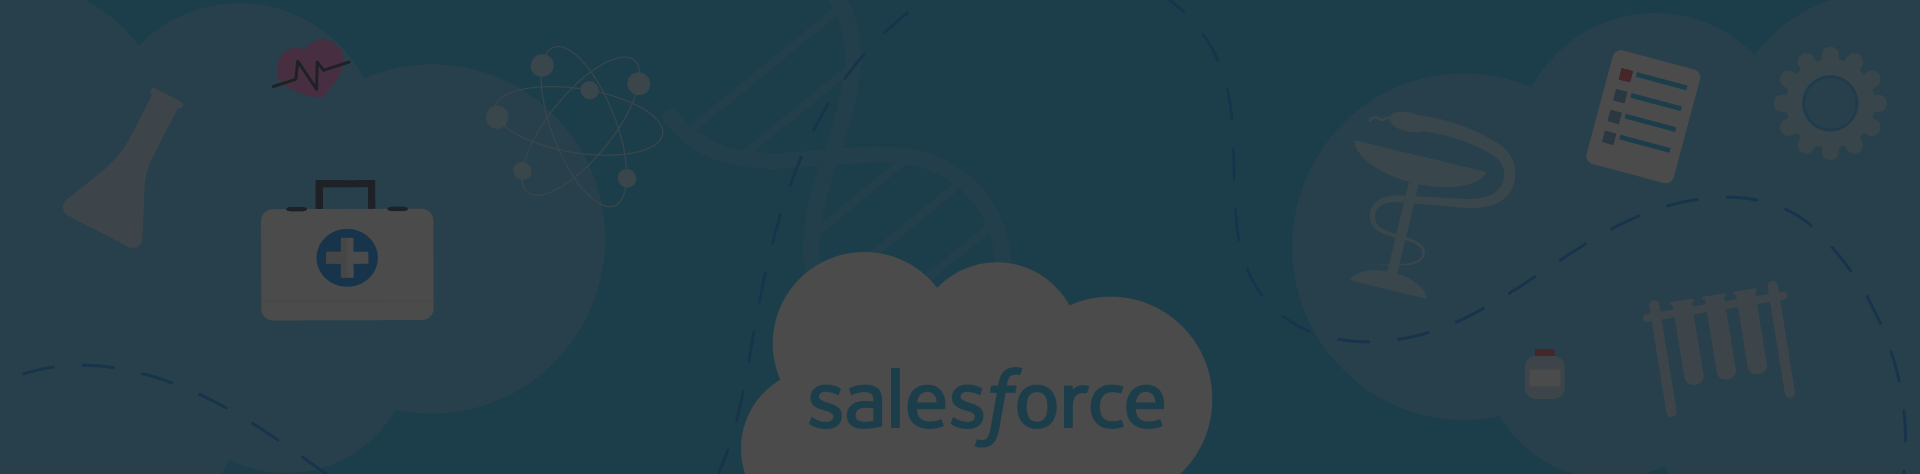 salesforce image